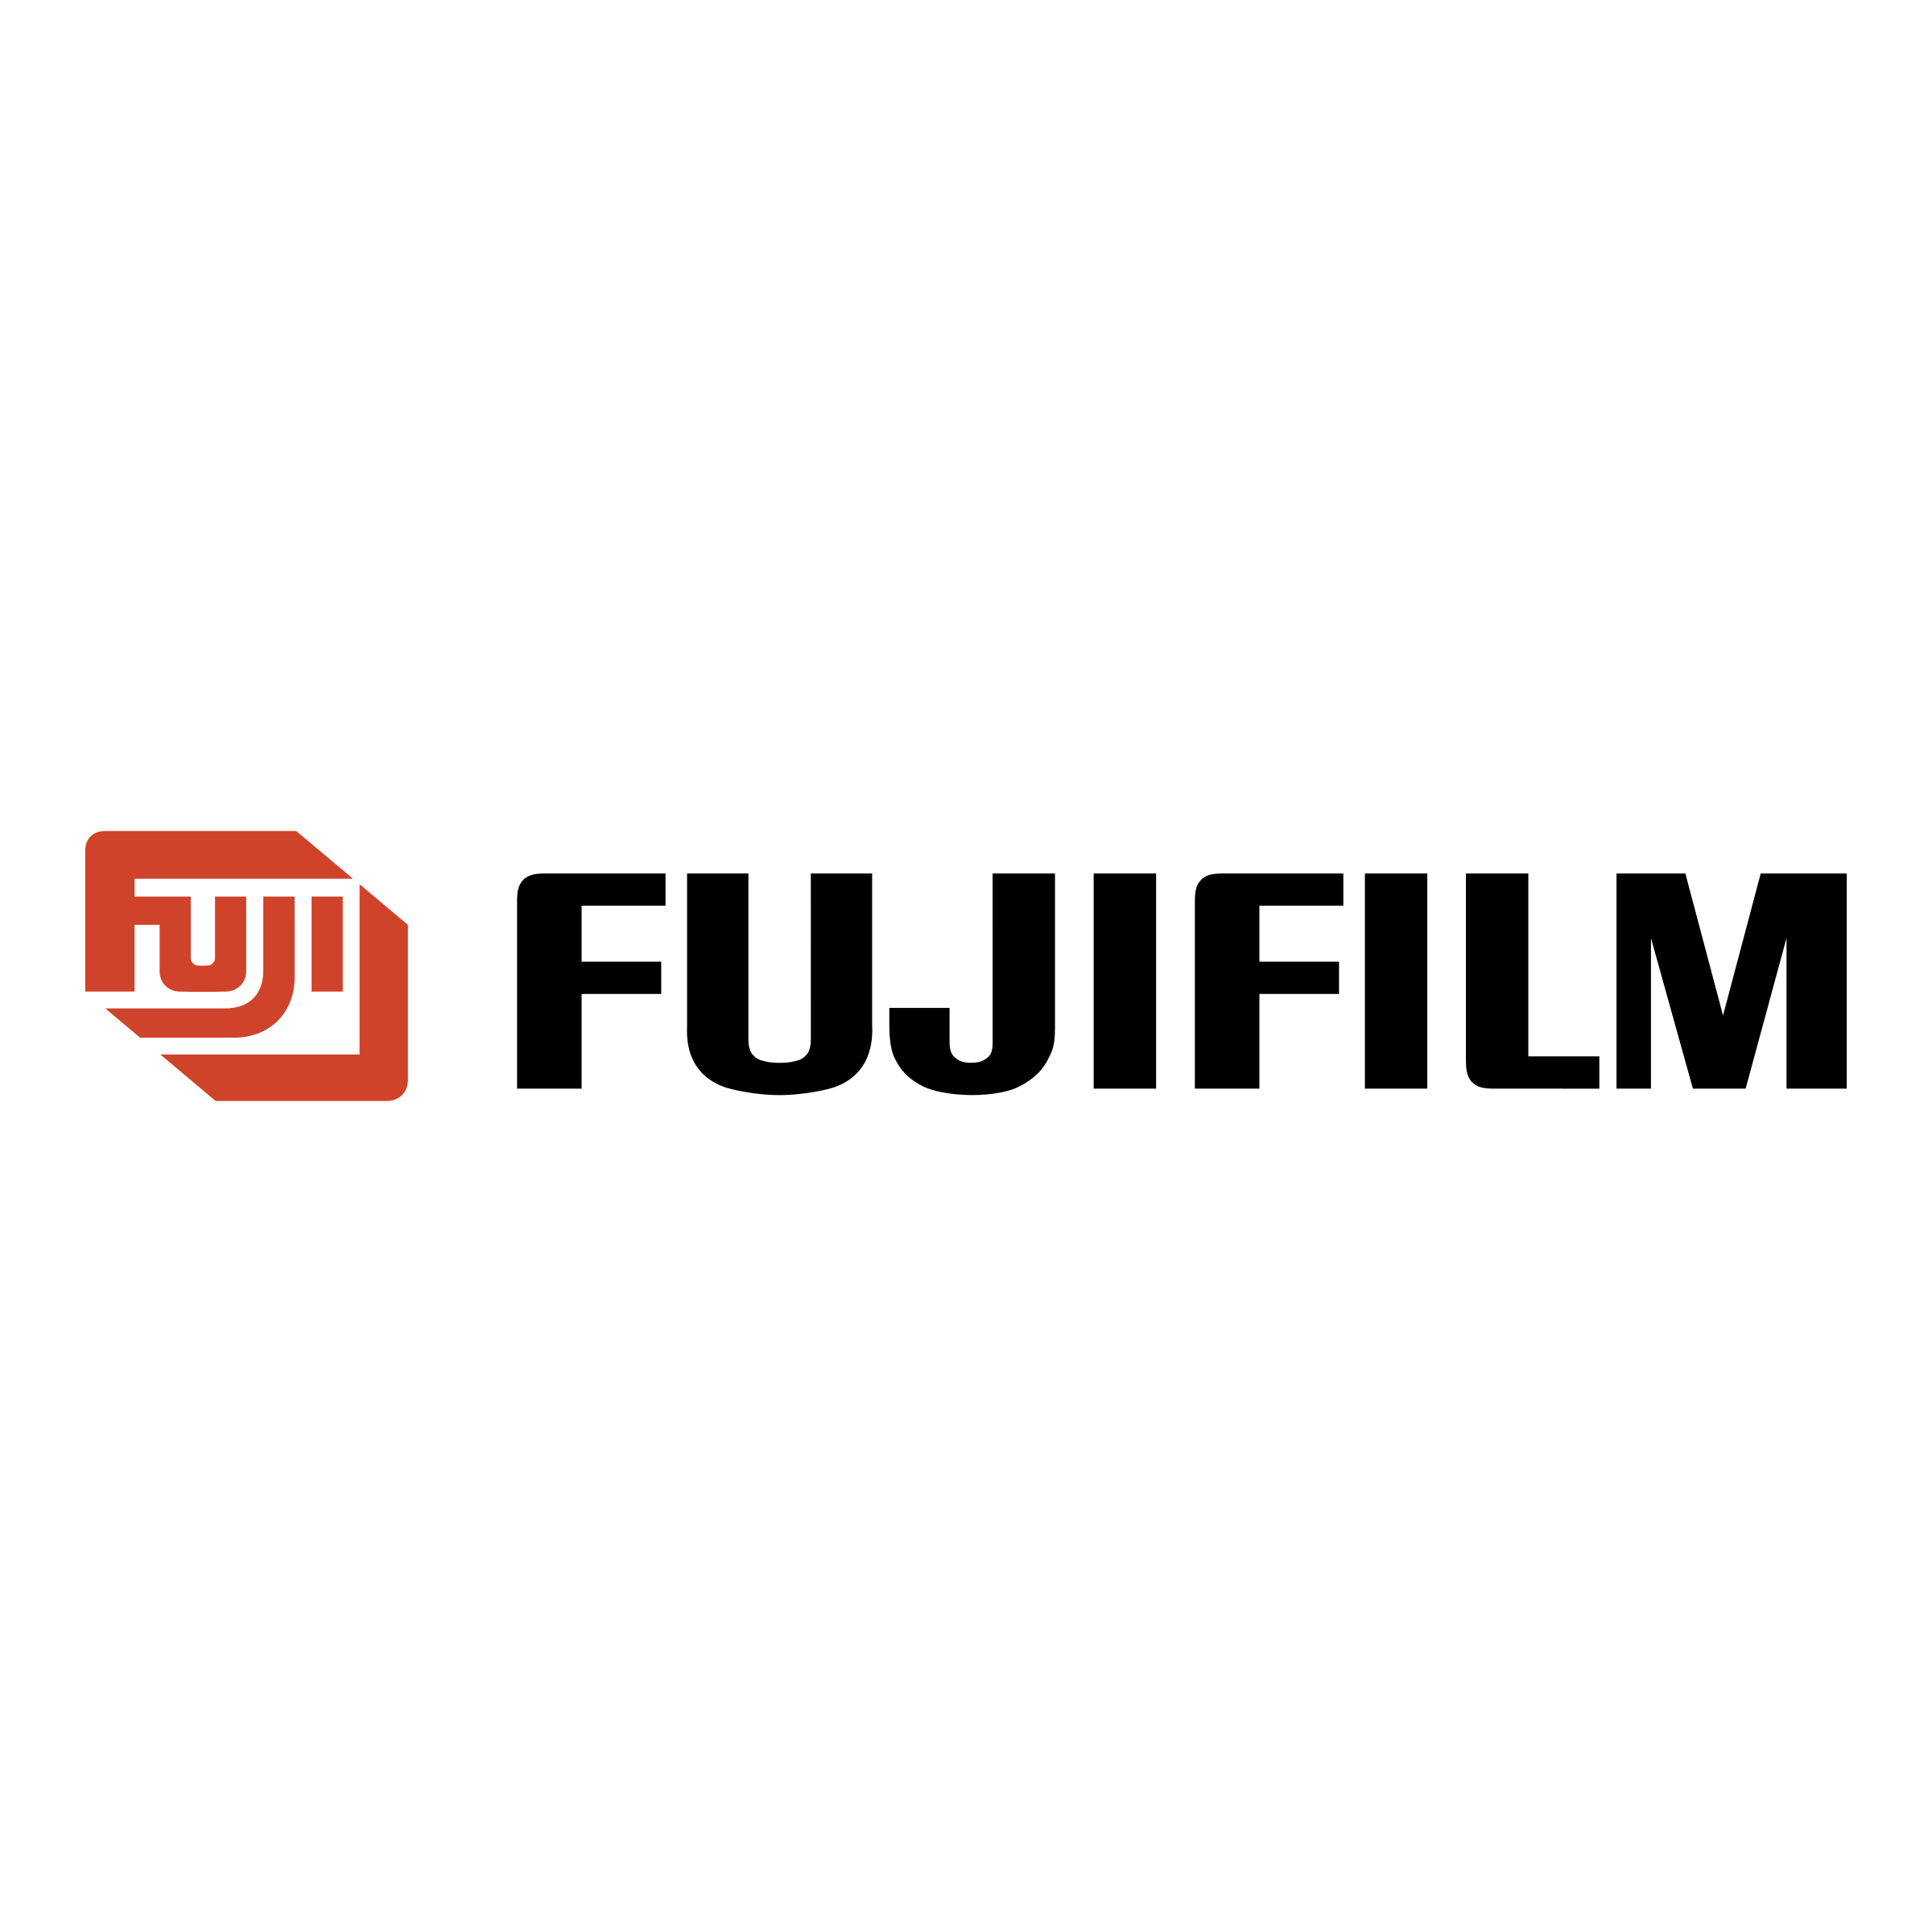 Fujifilm Logo - Fujifilm Logo PNG Transparent & SVG Vector - Freebie Supply